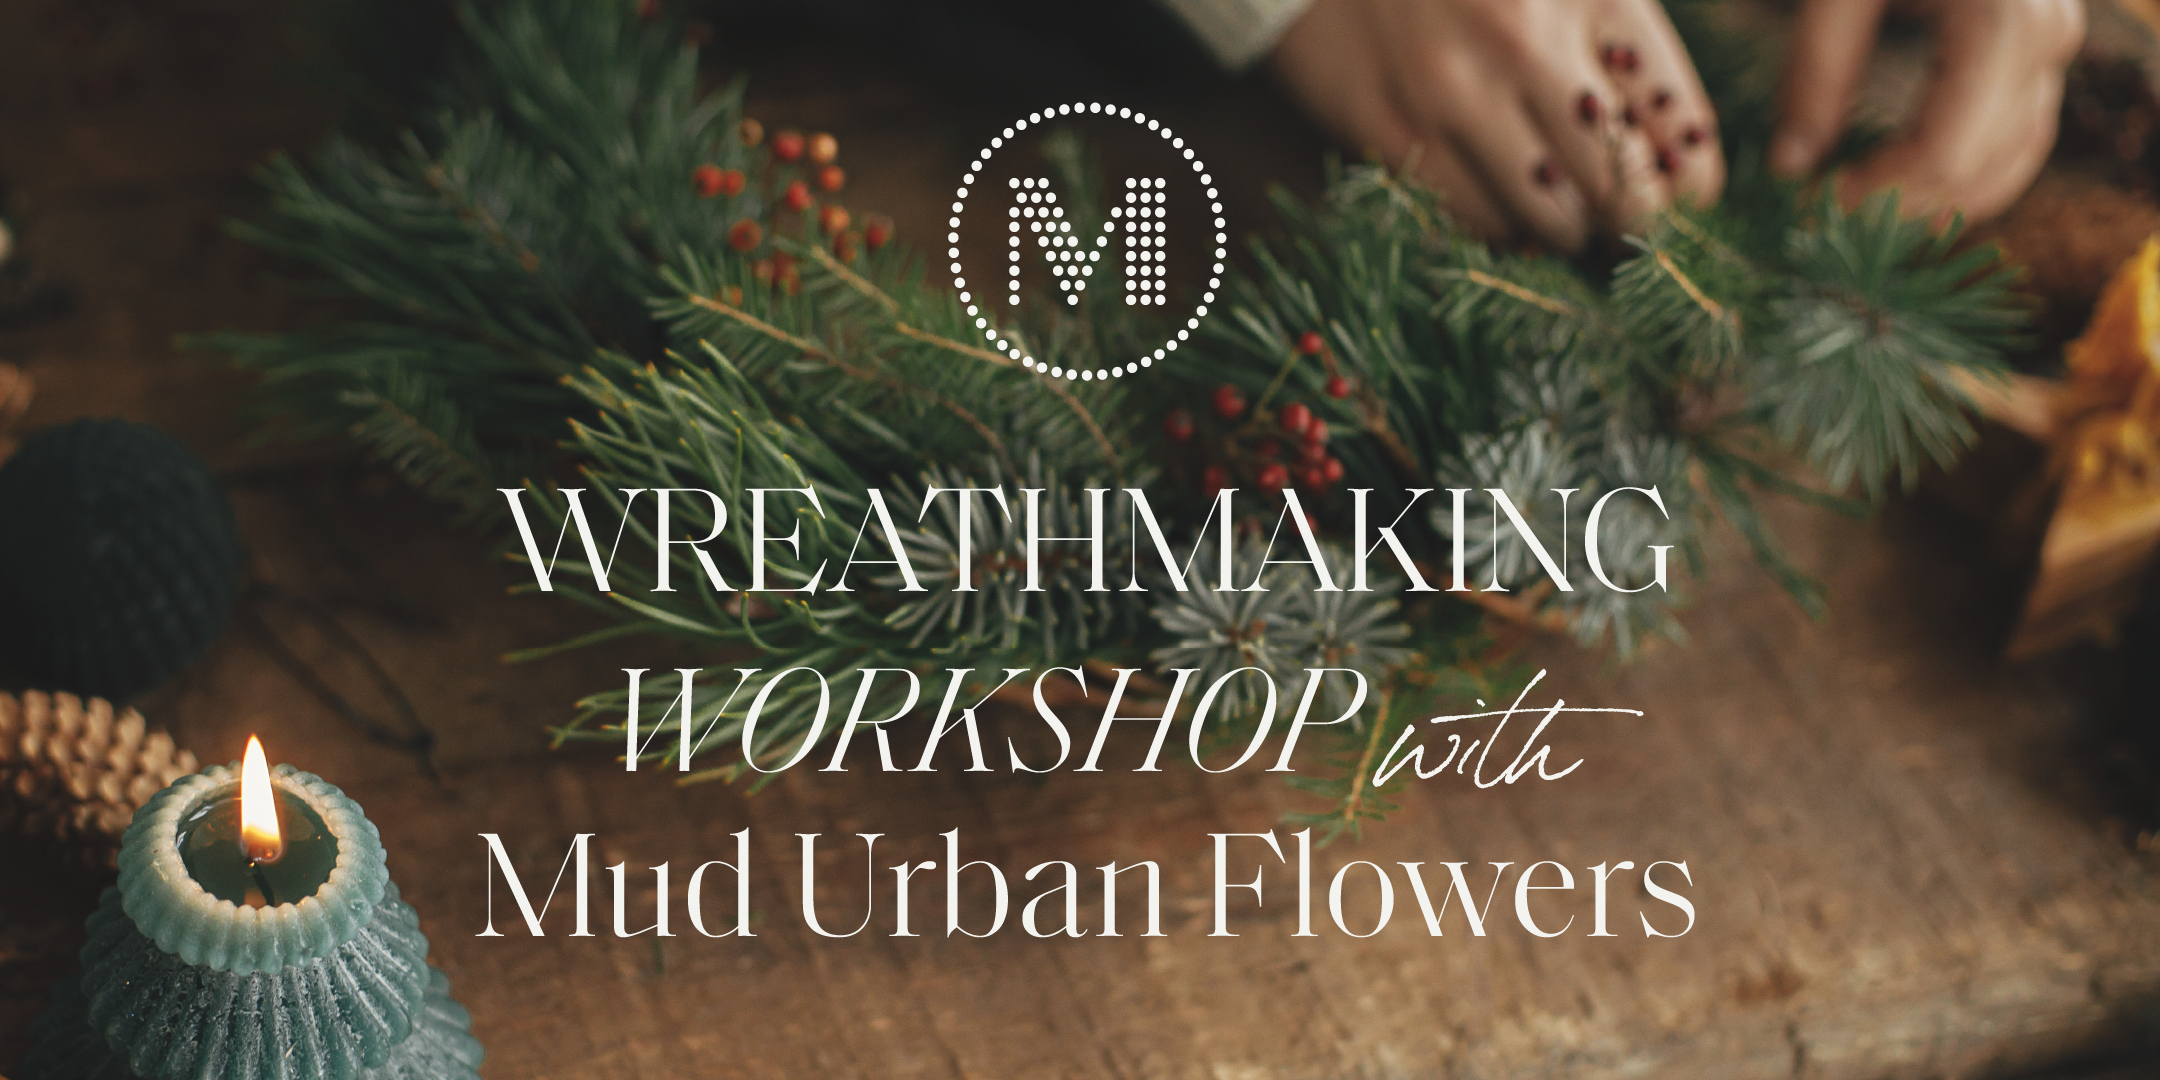 Wreathmaking Workshop with Mud Urban Flowers